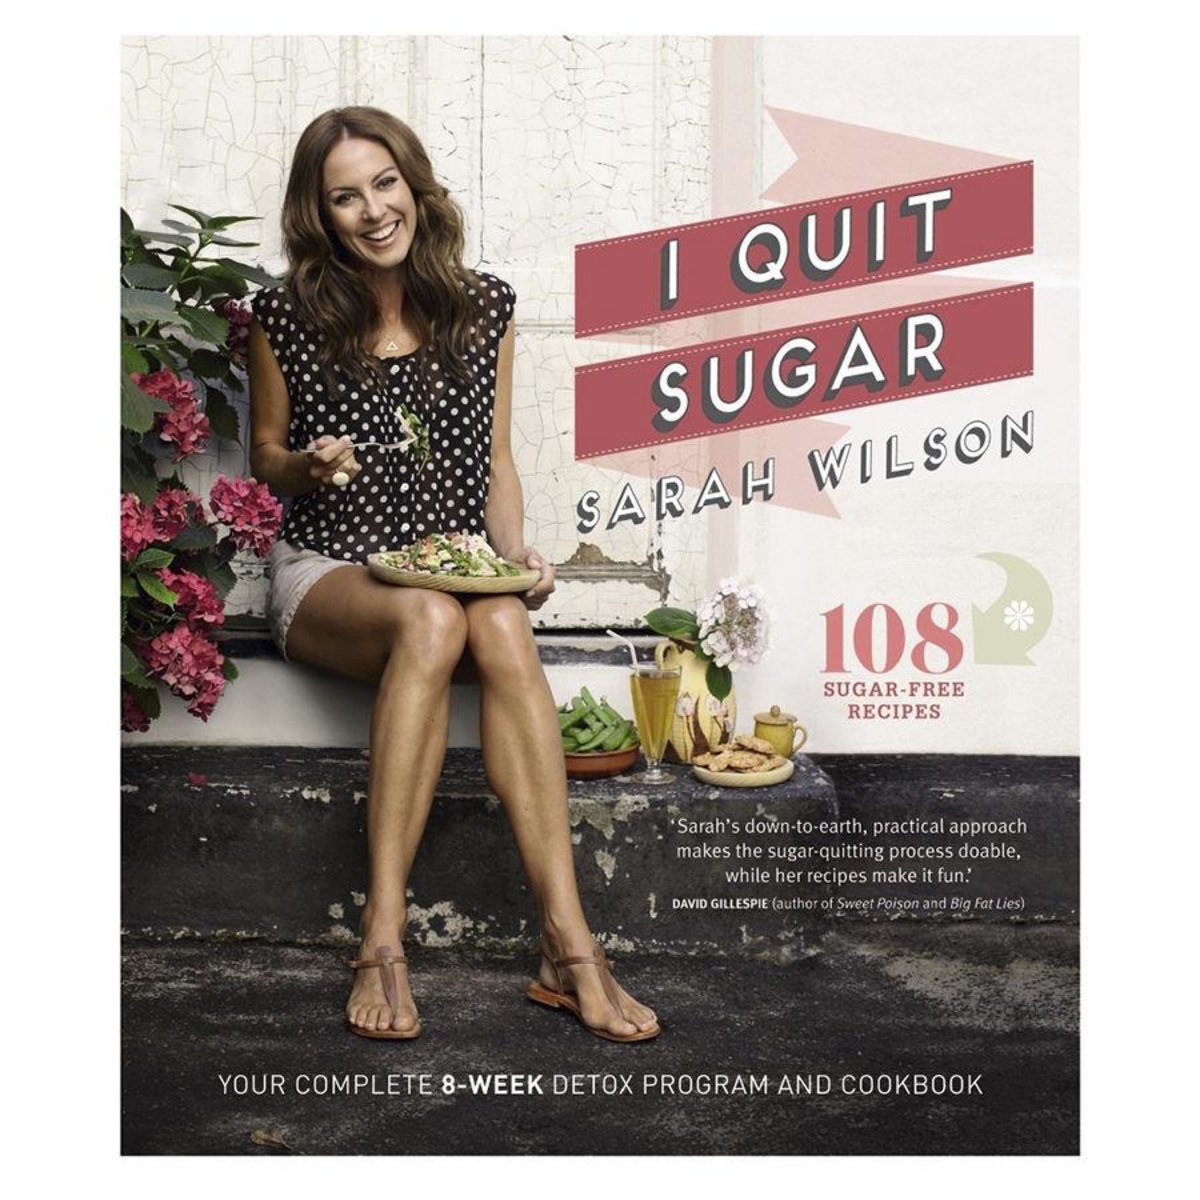 I Quit Sugar by Sarah Wilson - Book